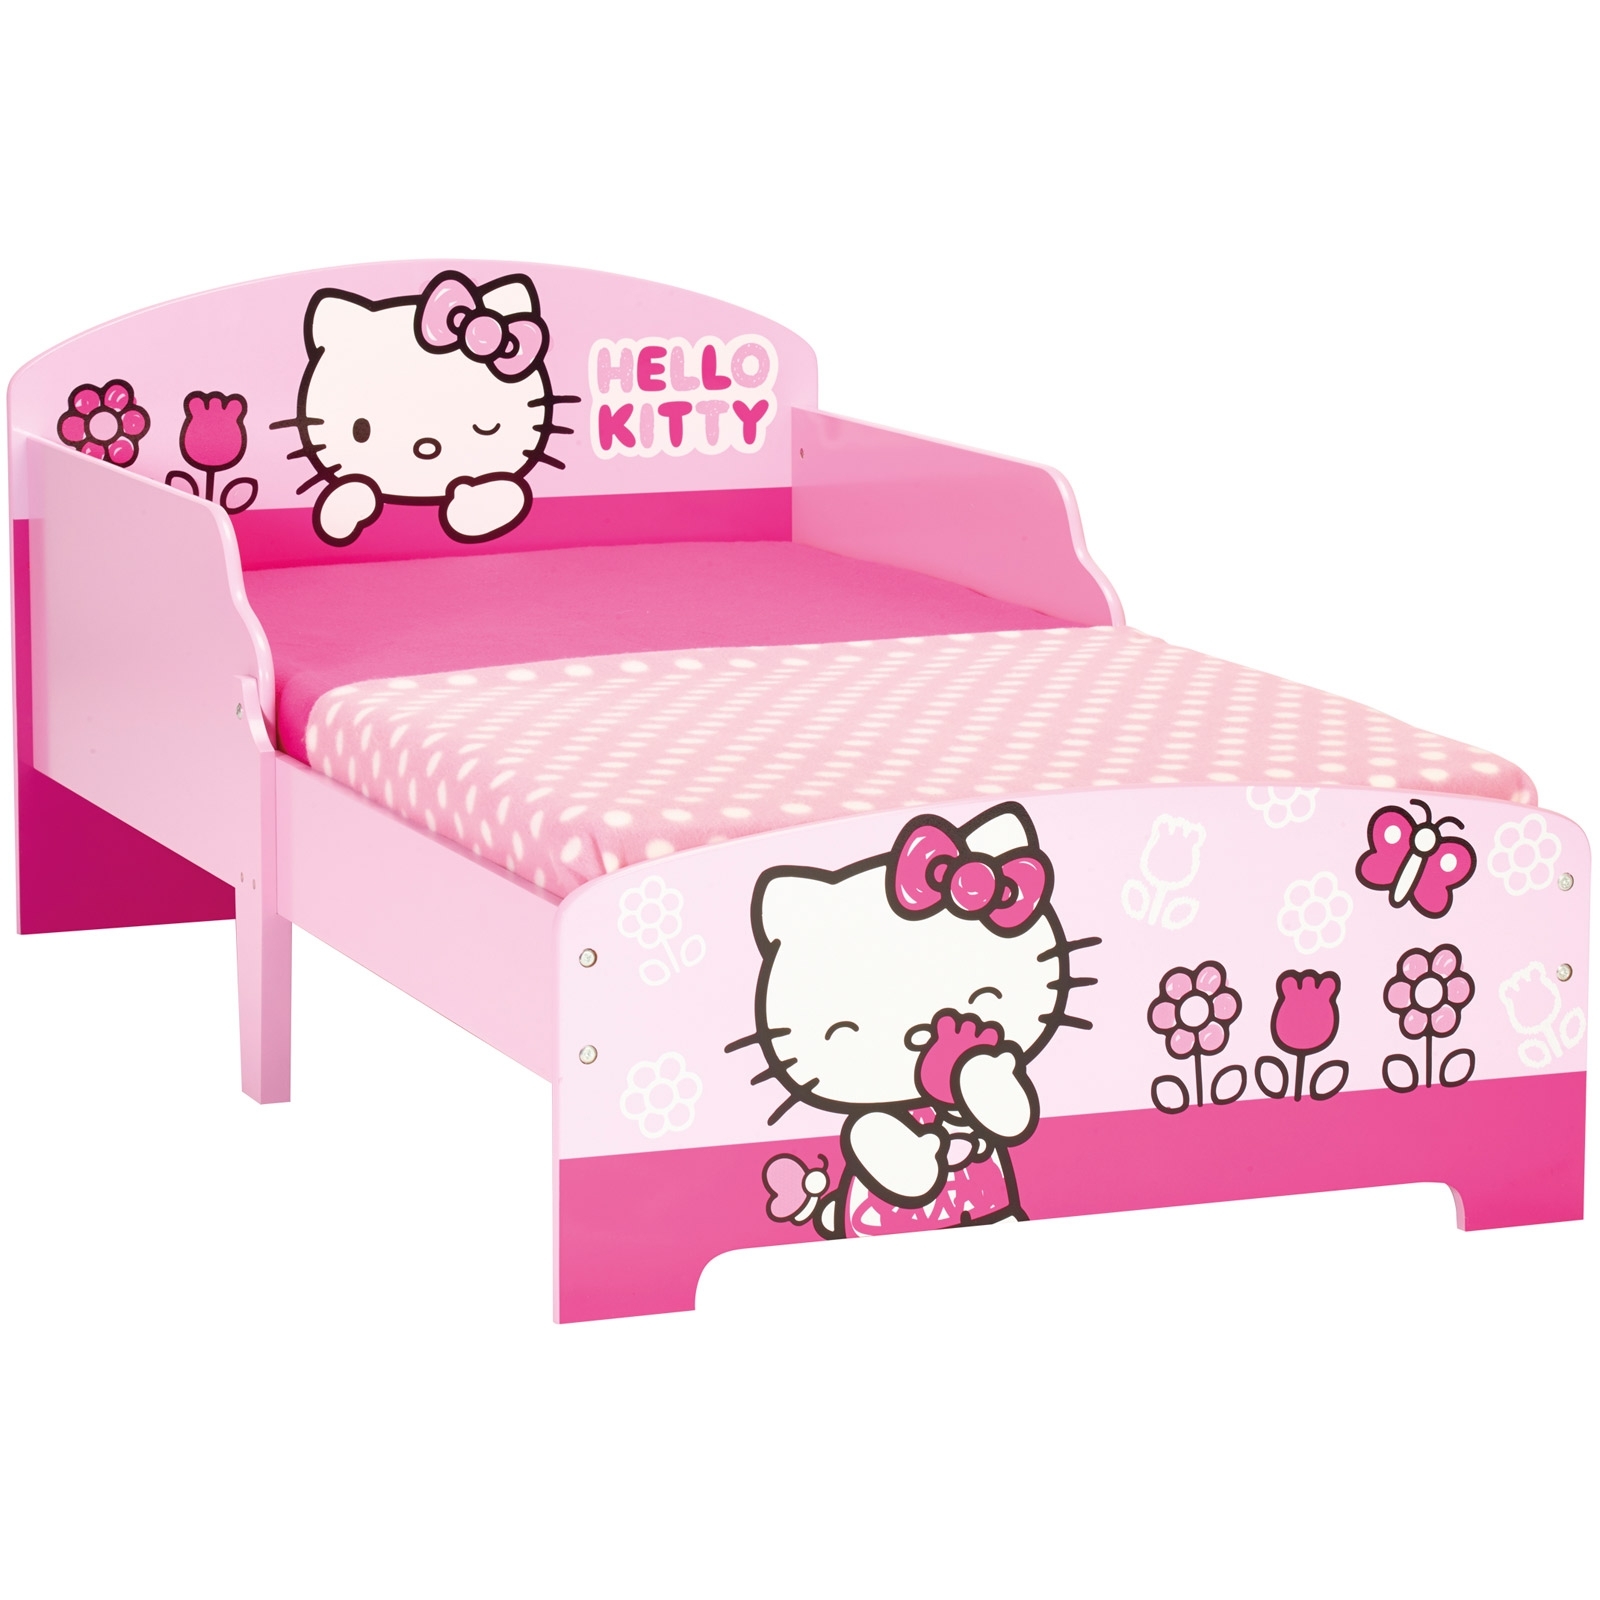  Lit  Hello  Kitty  Bed cosy LesTendances fr